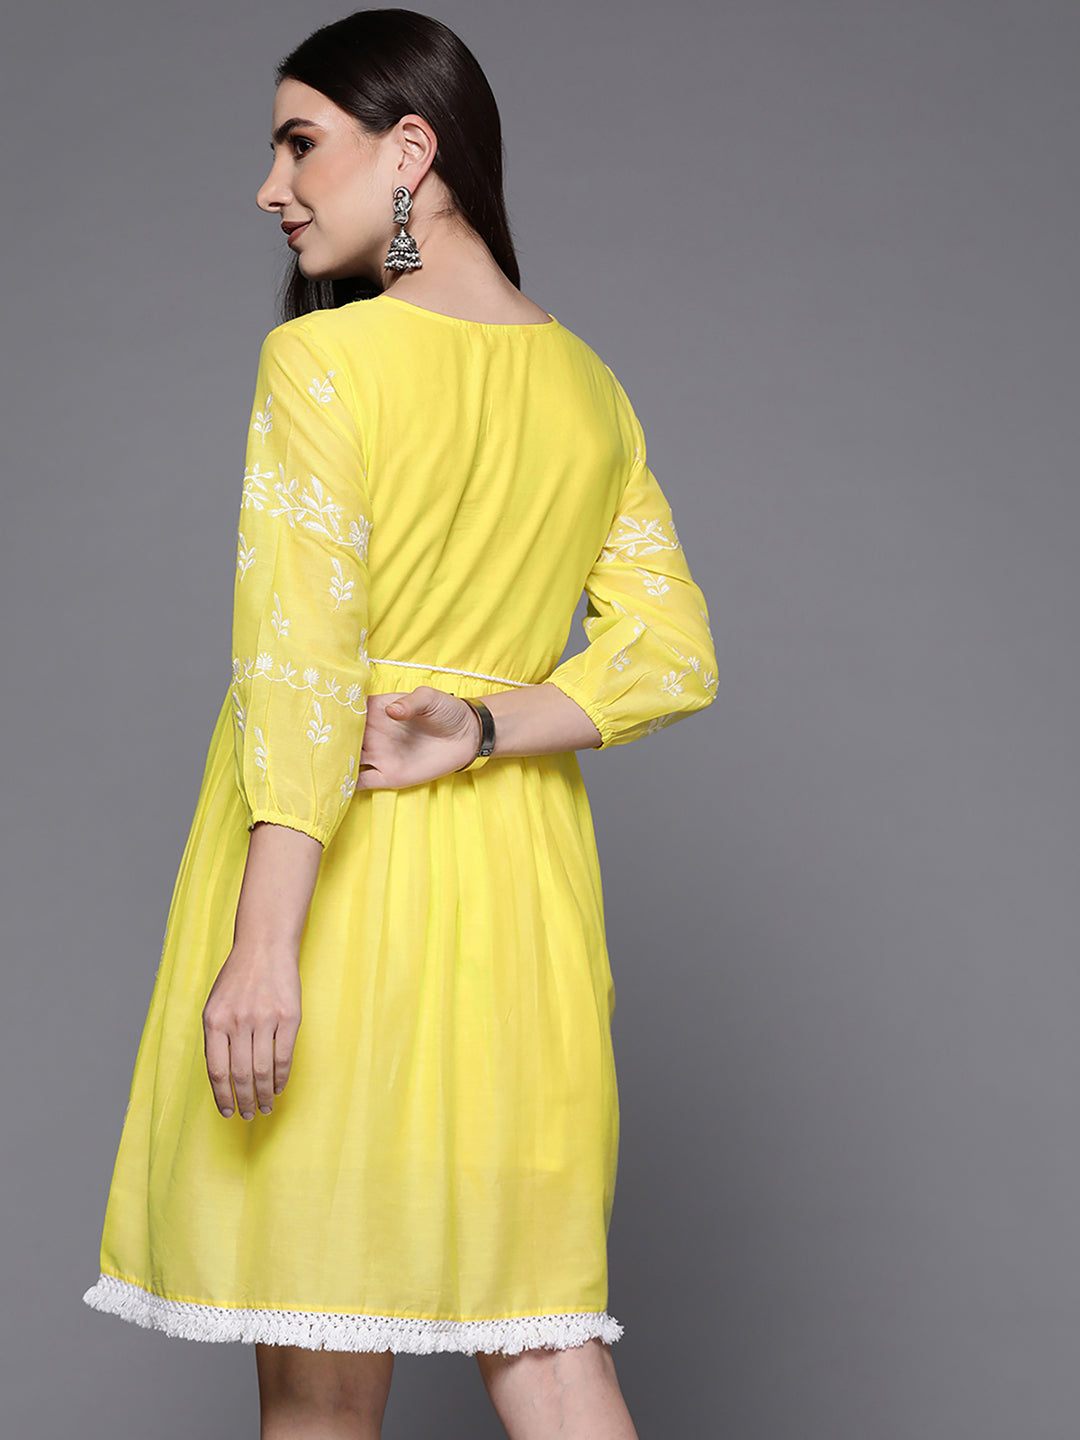 Bollywood Designer Yellow Rayon Cotton Beautiful Tassels Kurti Dress Ethnic  Gown | eBay